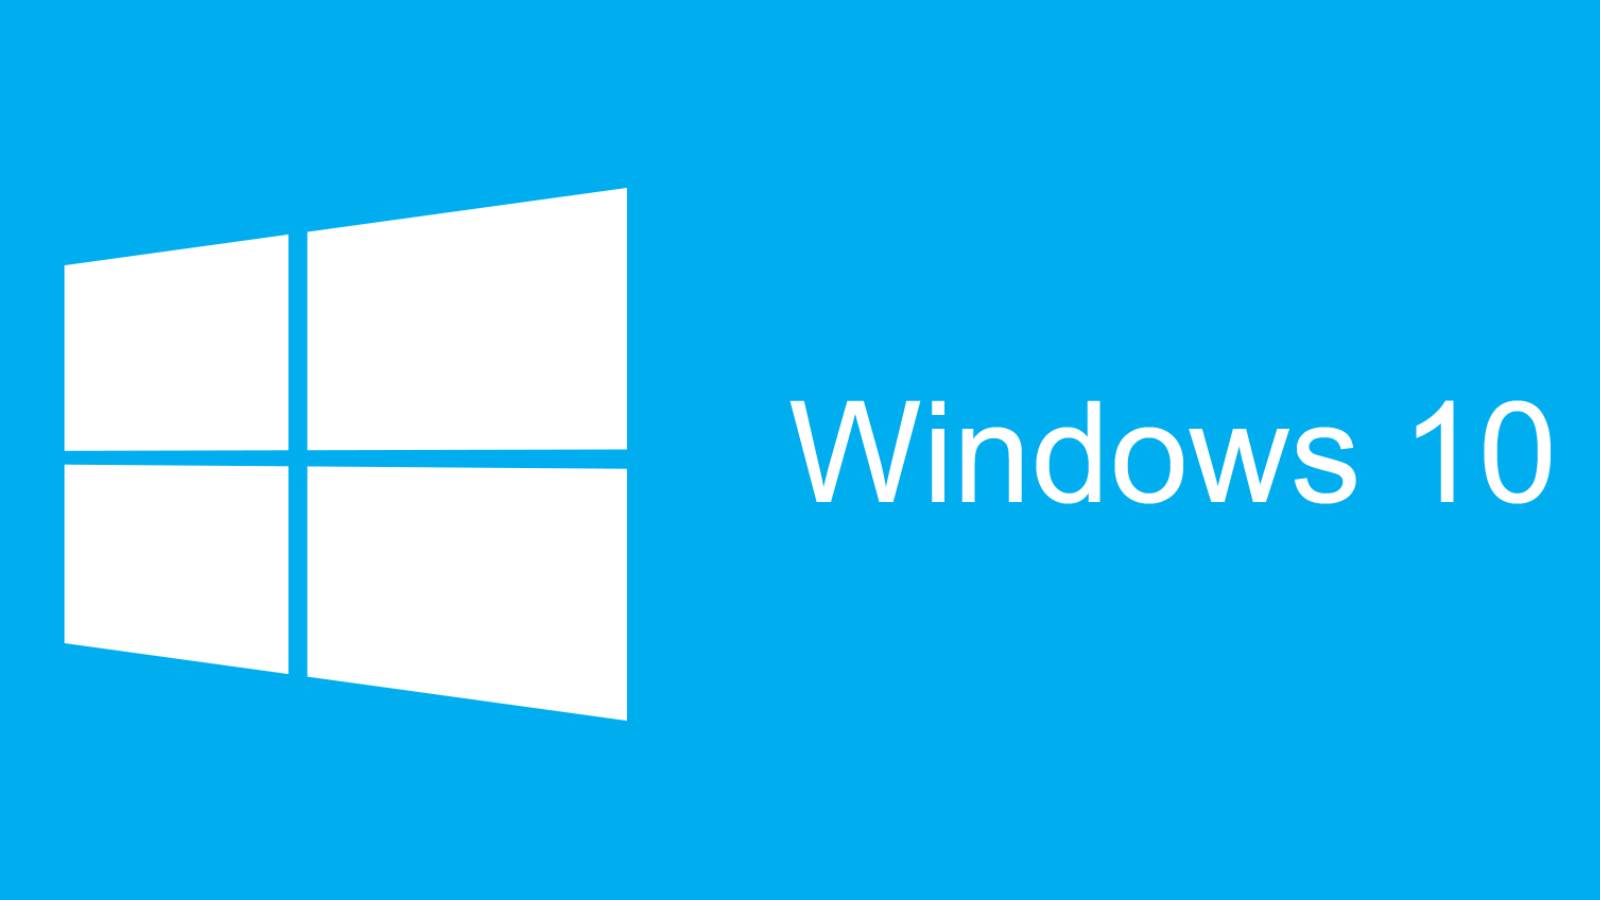 Windows 10 ALERTA Noua Emisa Atentie Problema Grava